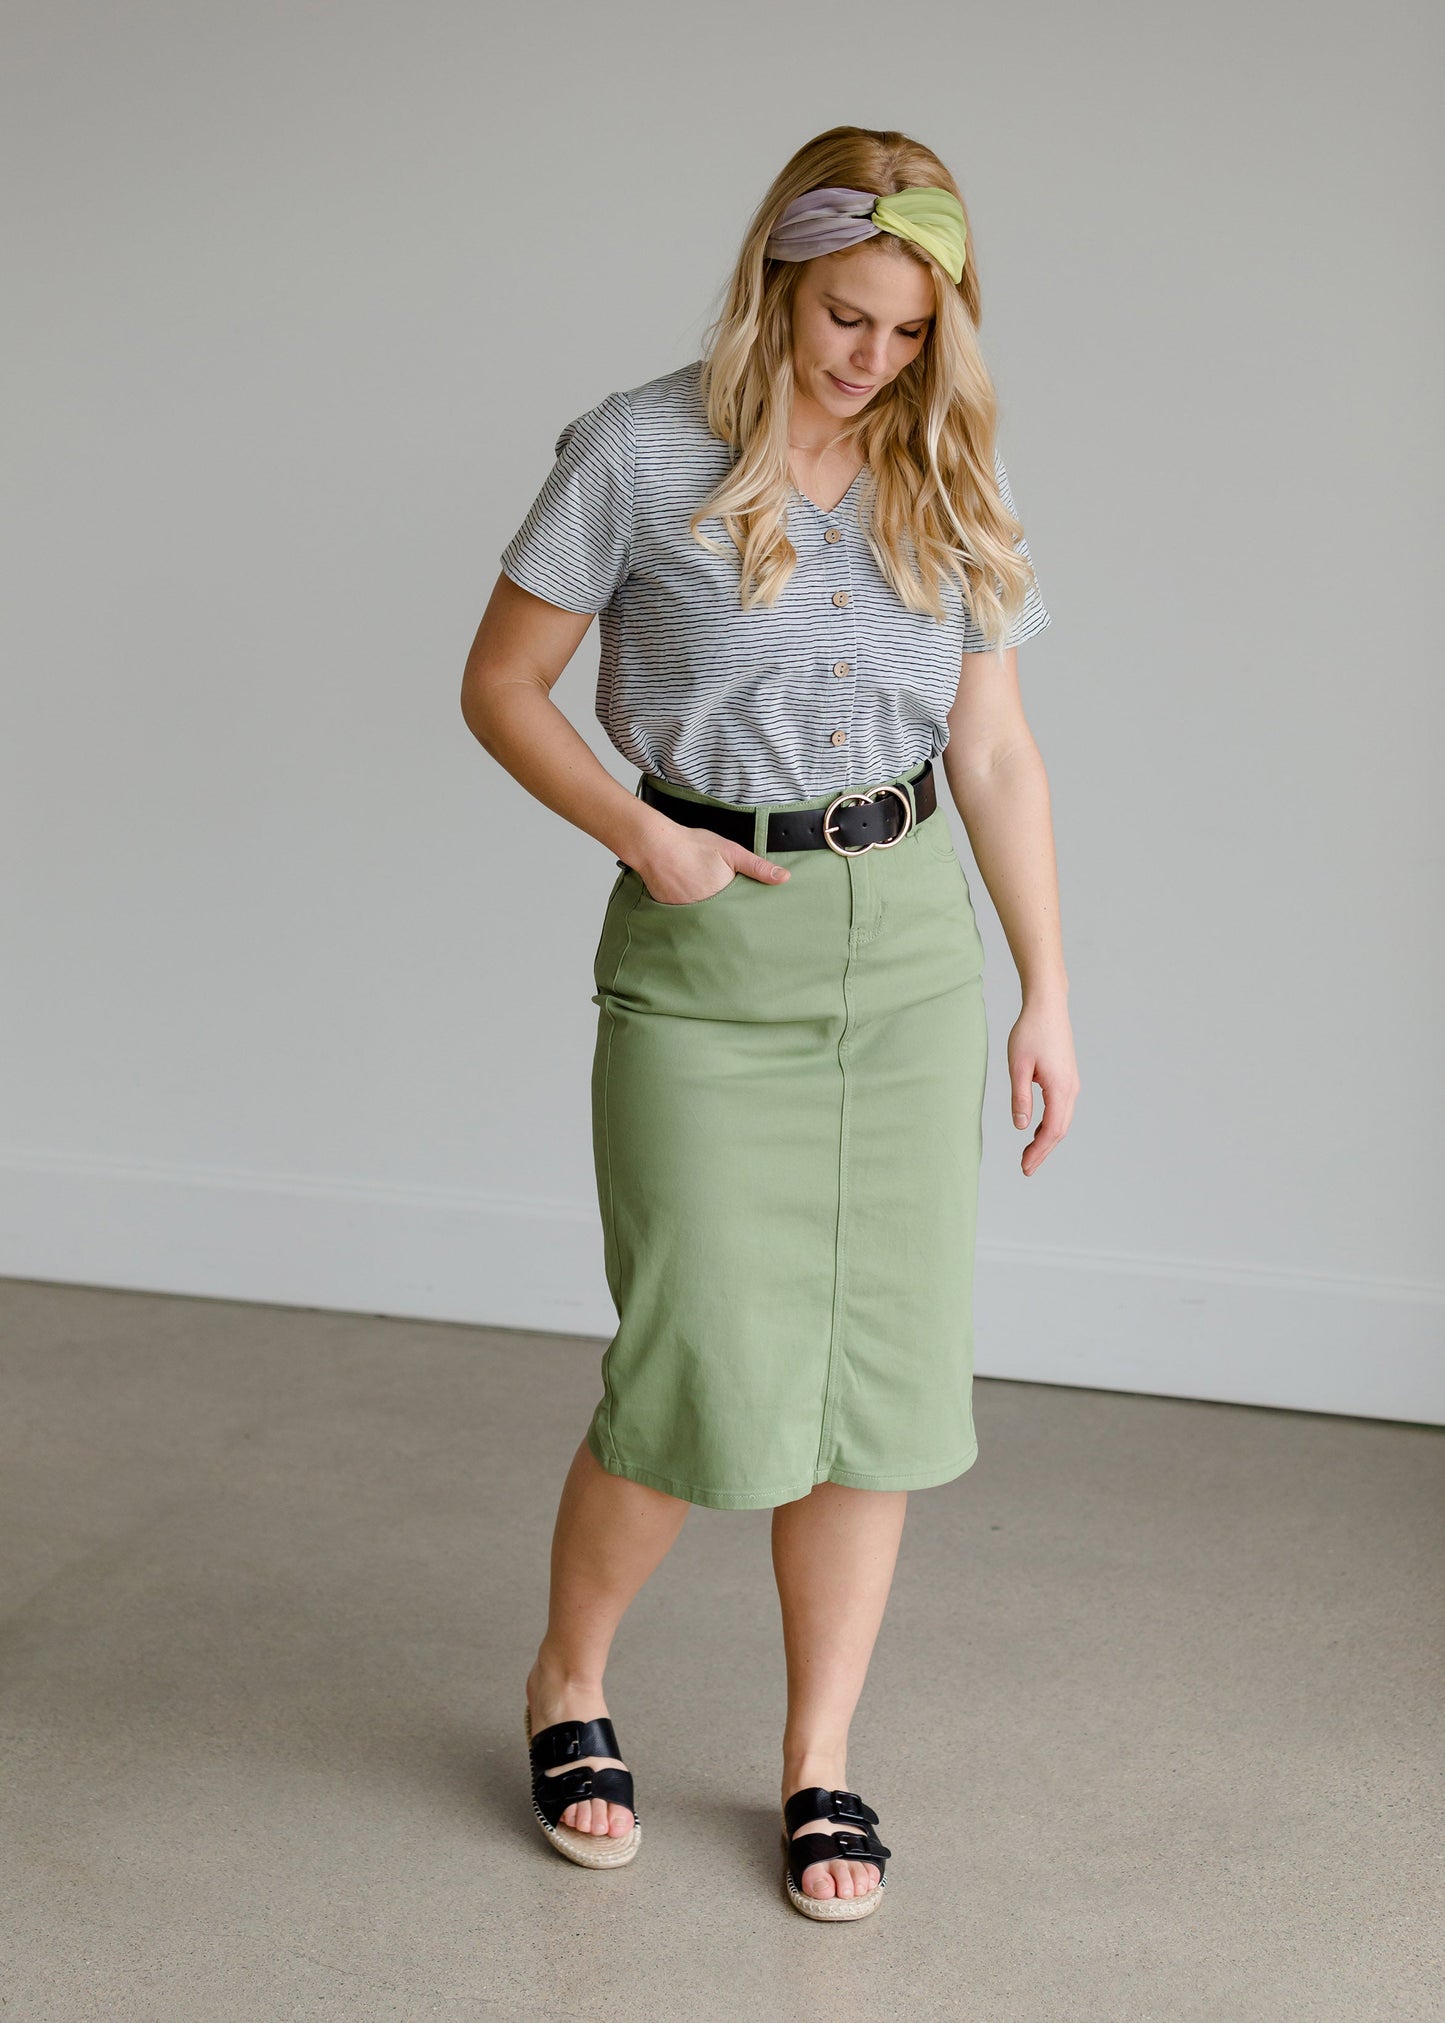 Remi Sage Midi Skirt - FINAL SALE Skirts